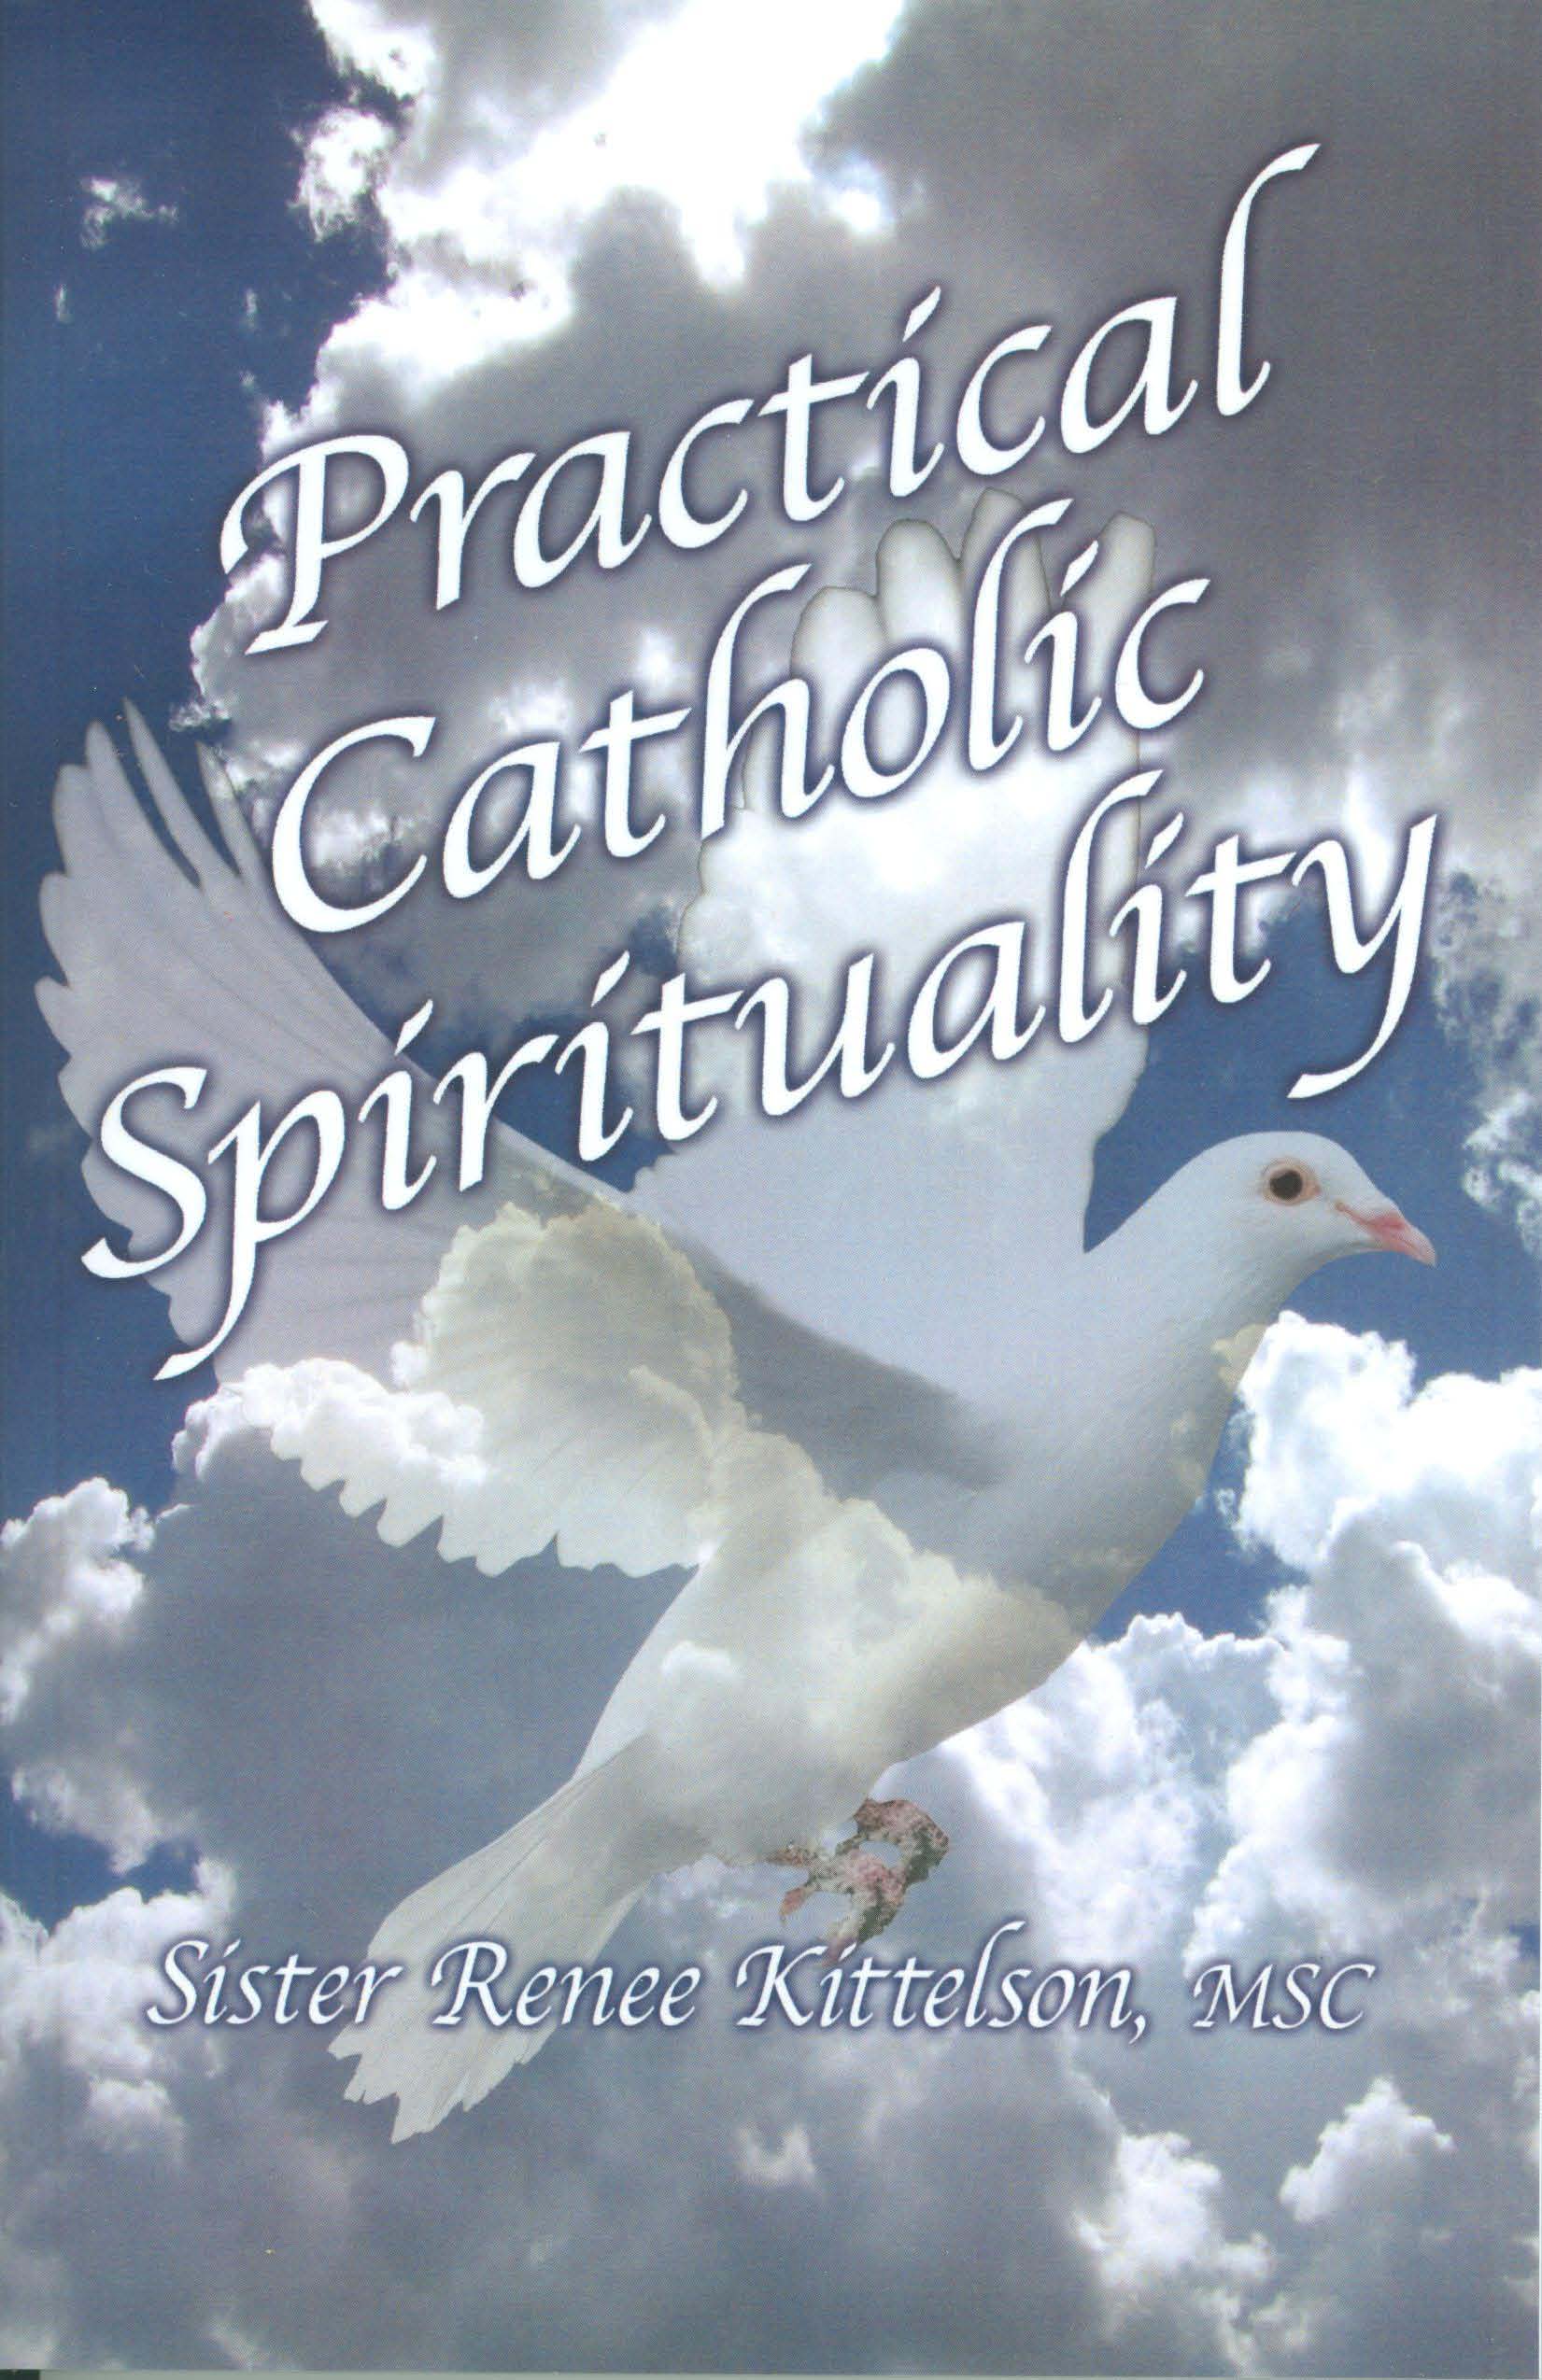 Practical Catholic Spirituality